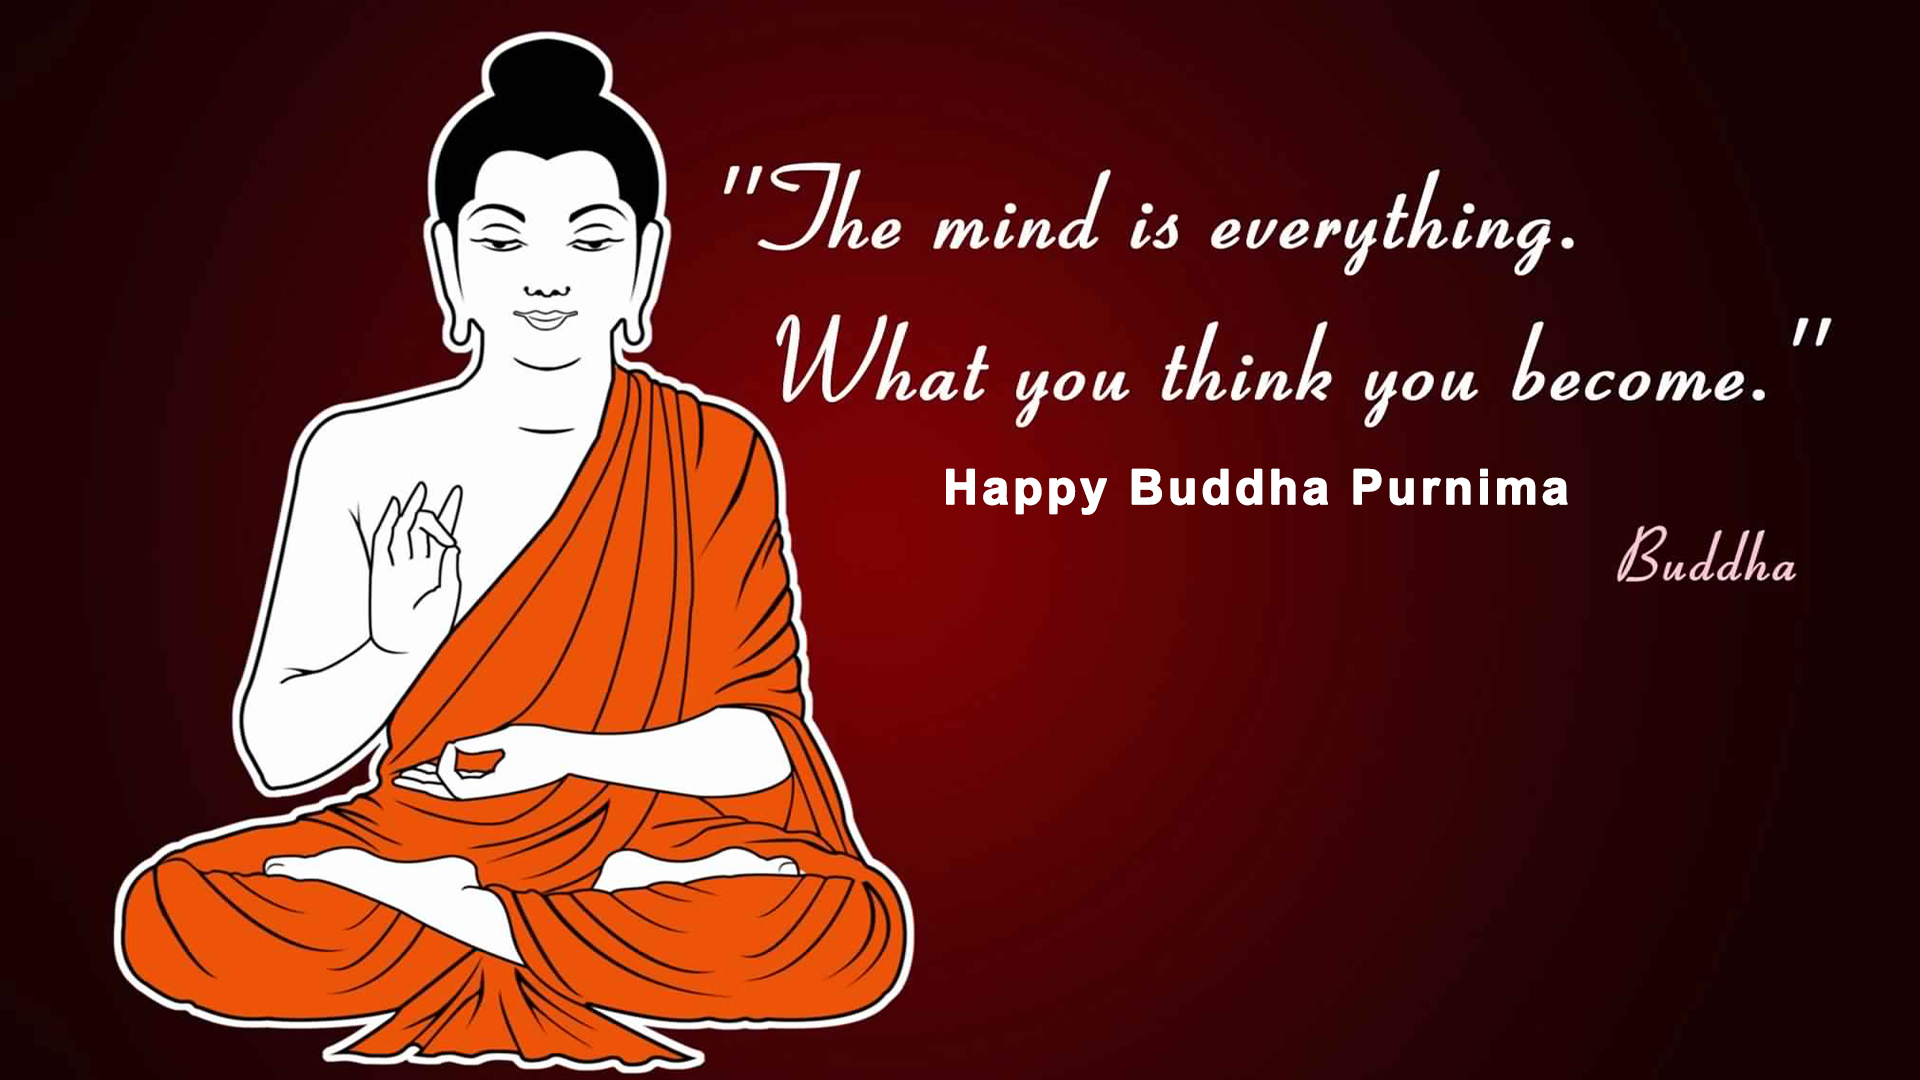 Happy Buddha Purnima Quotes In Hindi